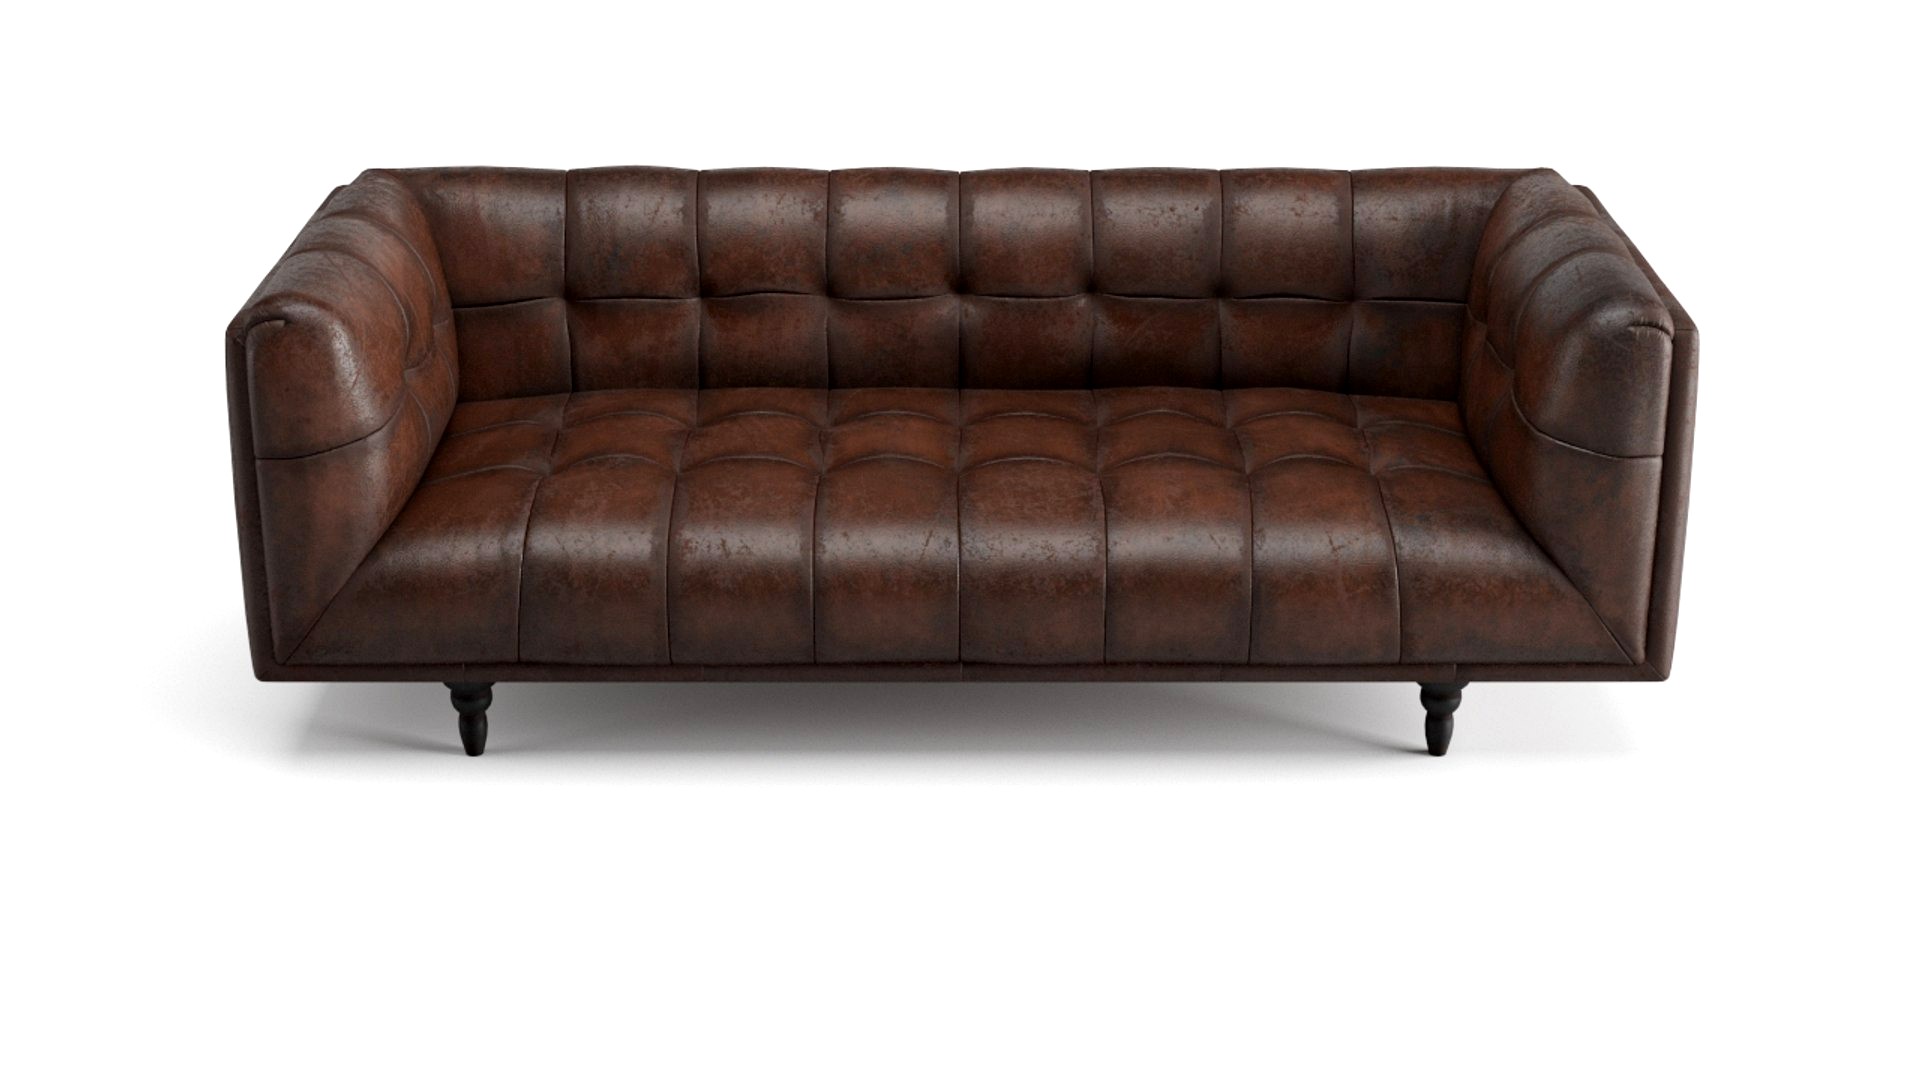 Old Leather Sofa